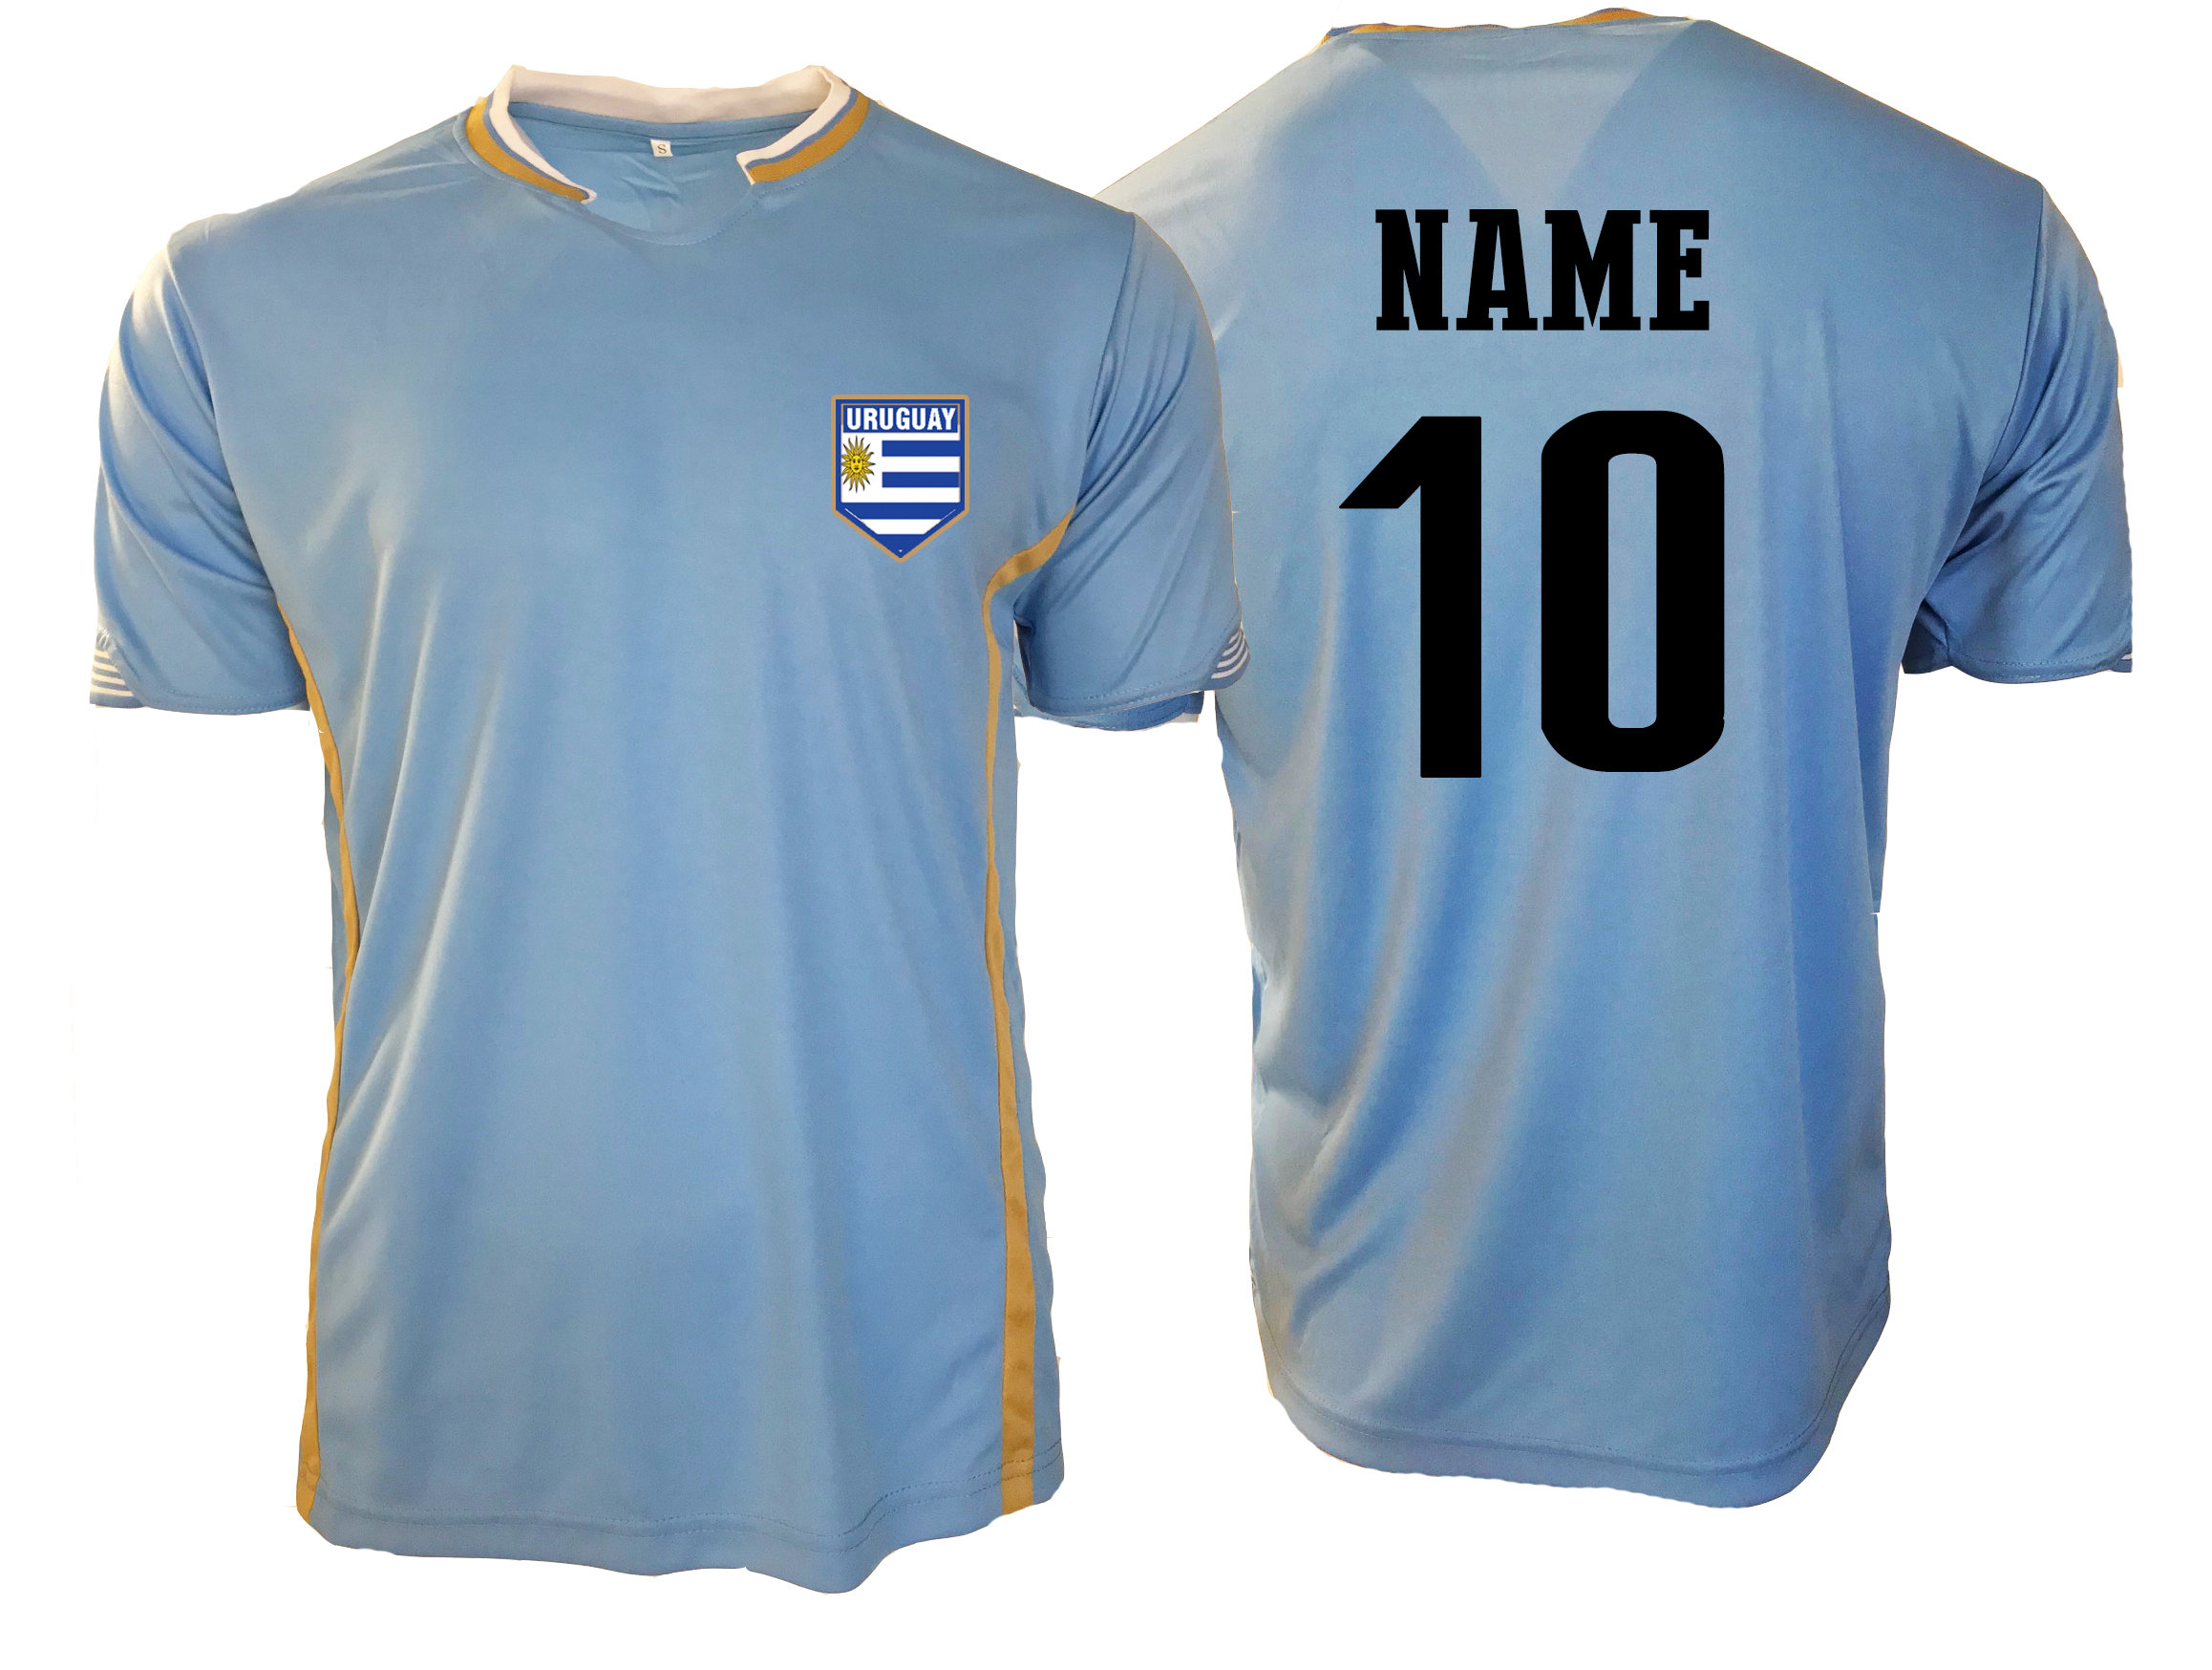 Uruguay national team jersey